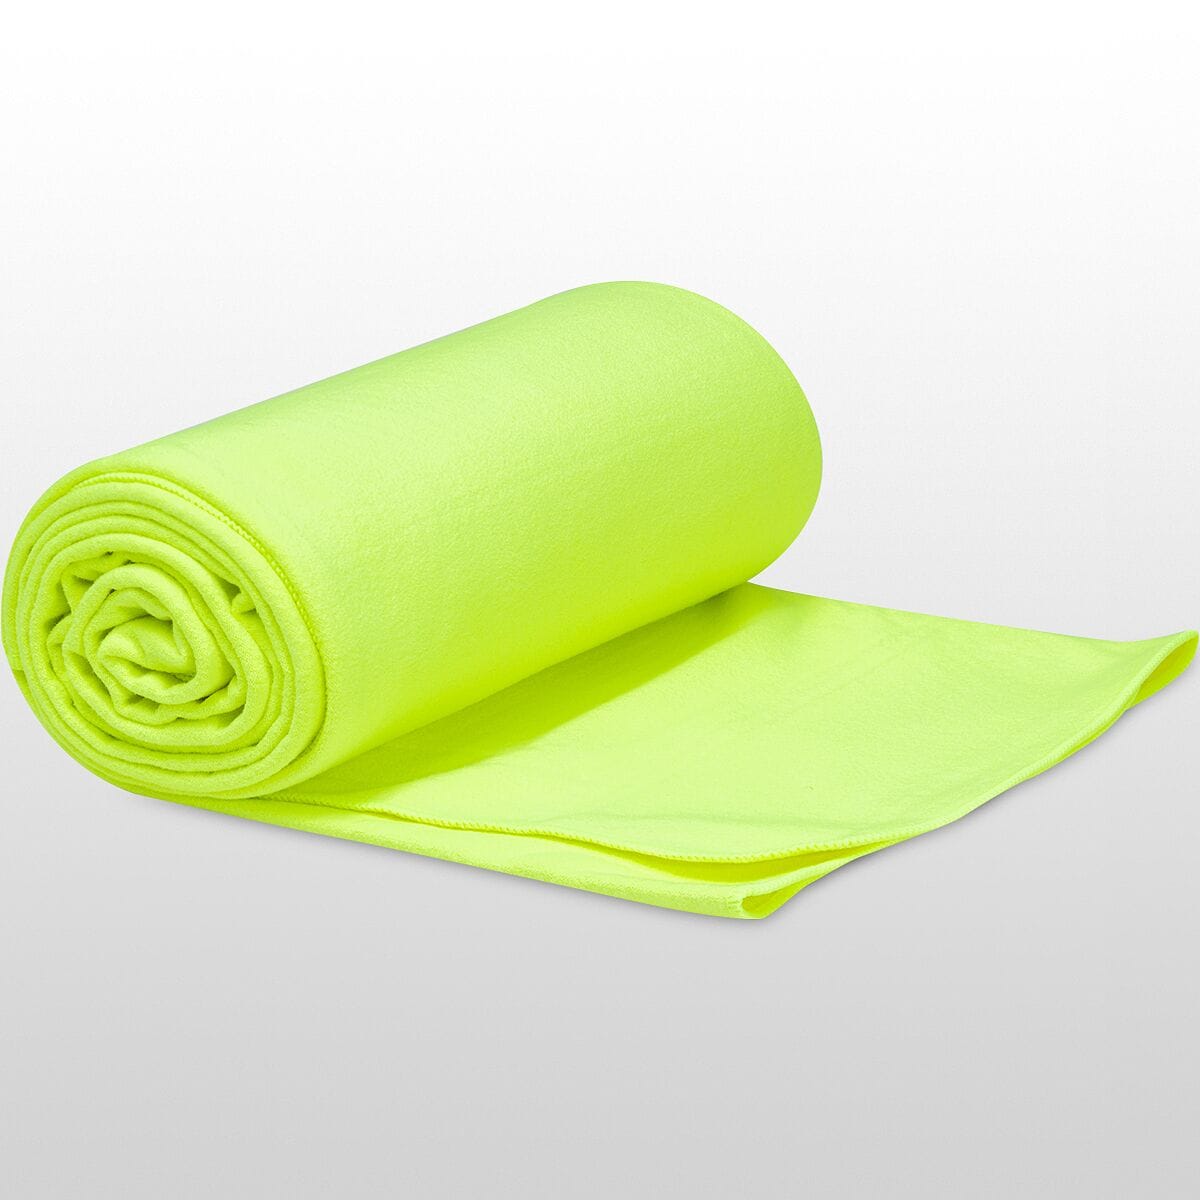 ALO YOGA Grounded No-Slip Mat Towel - Yoga